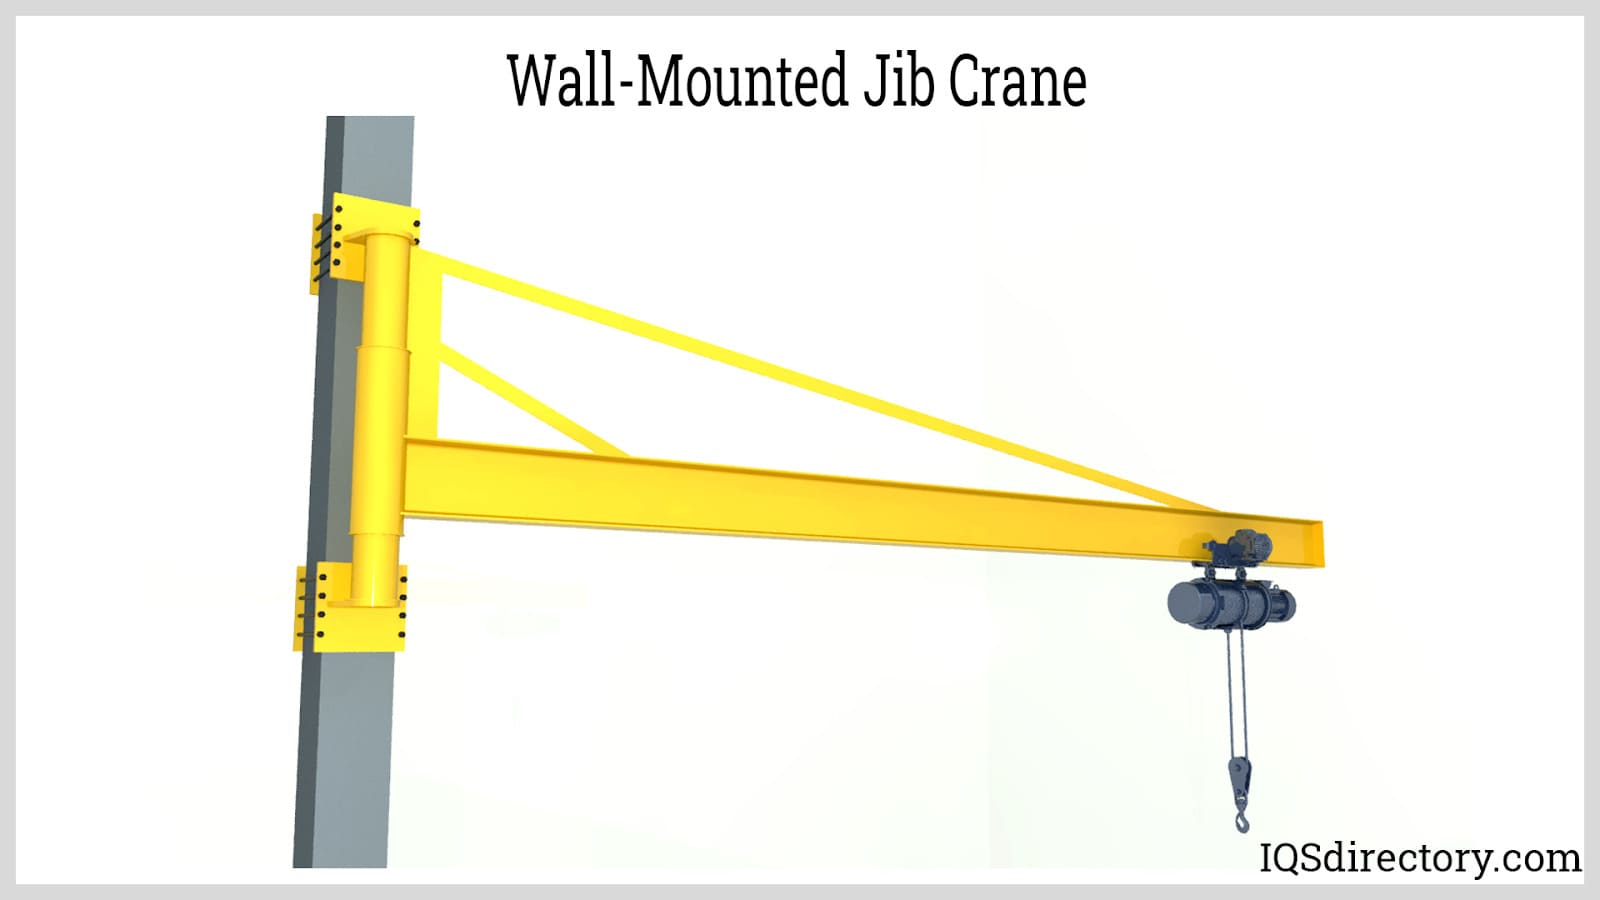 Wall-Mounted Jib Crane